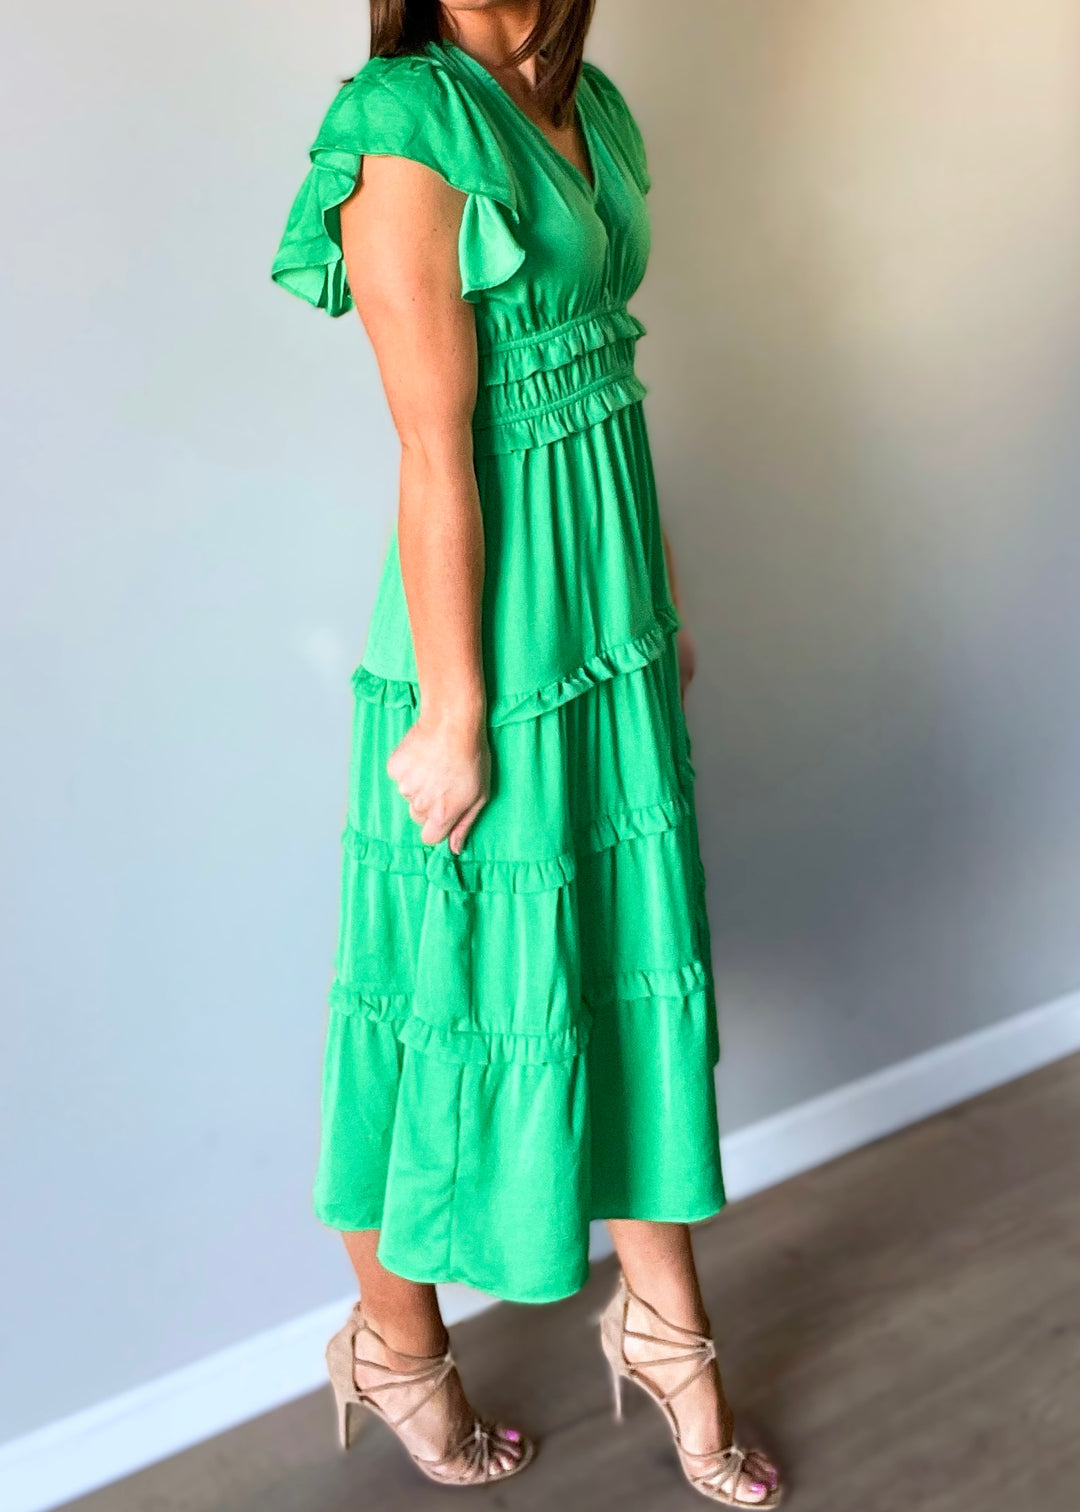 Green V-Neck Tiered Dress | Spring Dresses | Women's Dresses | Summer Dresses | Wedding Guest Dress